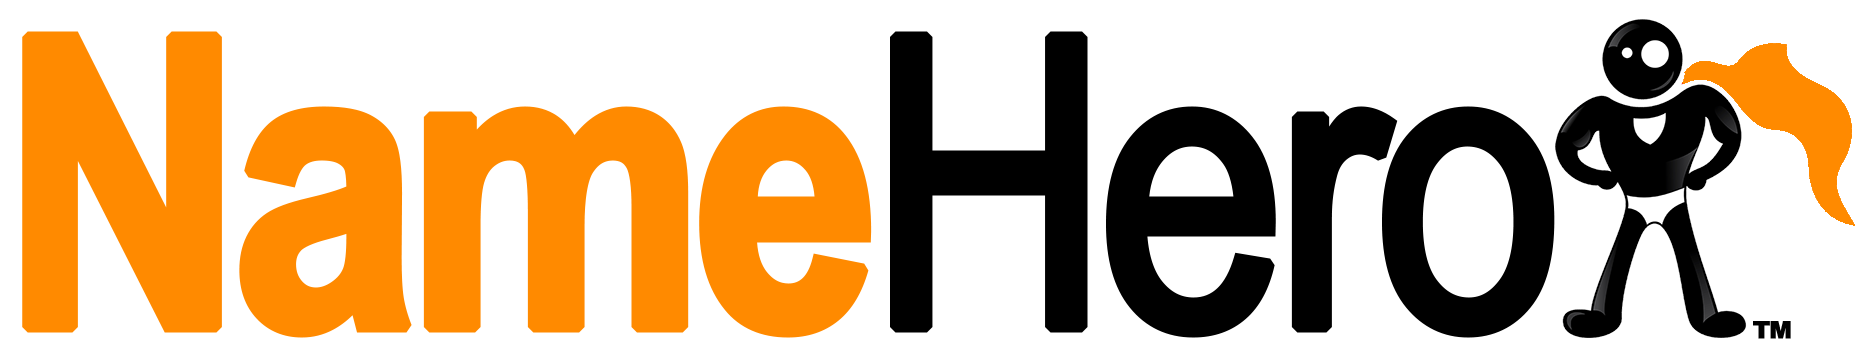 NameHero Logo